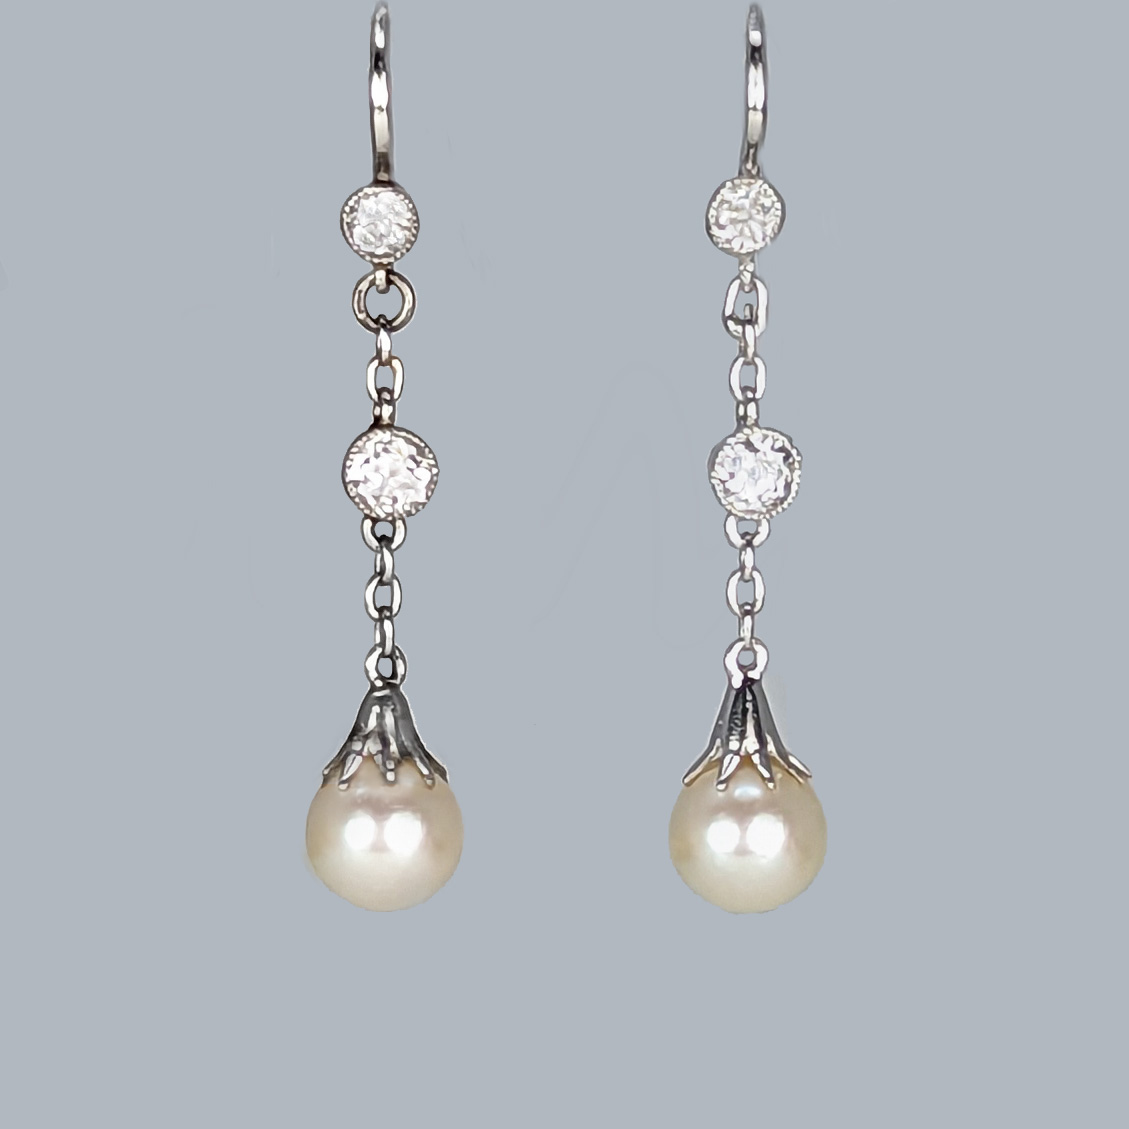 Antique earrings pearl drop